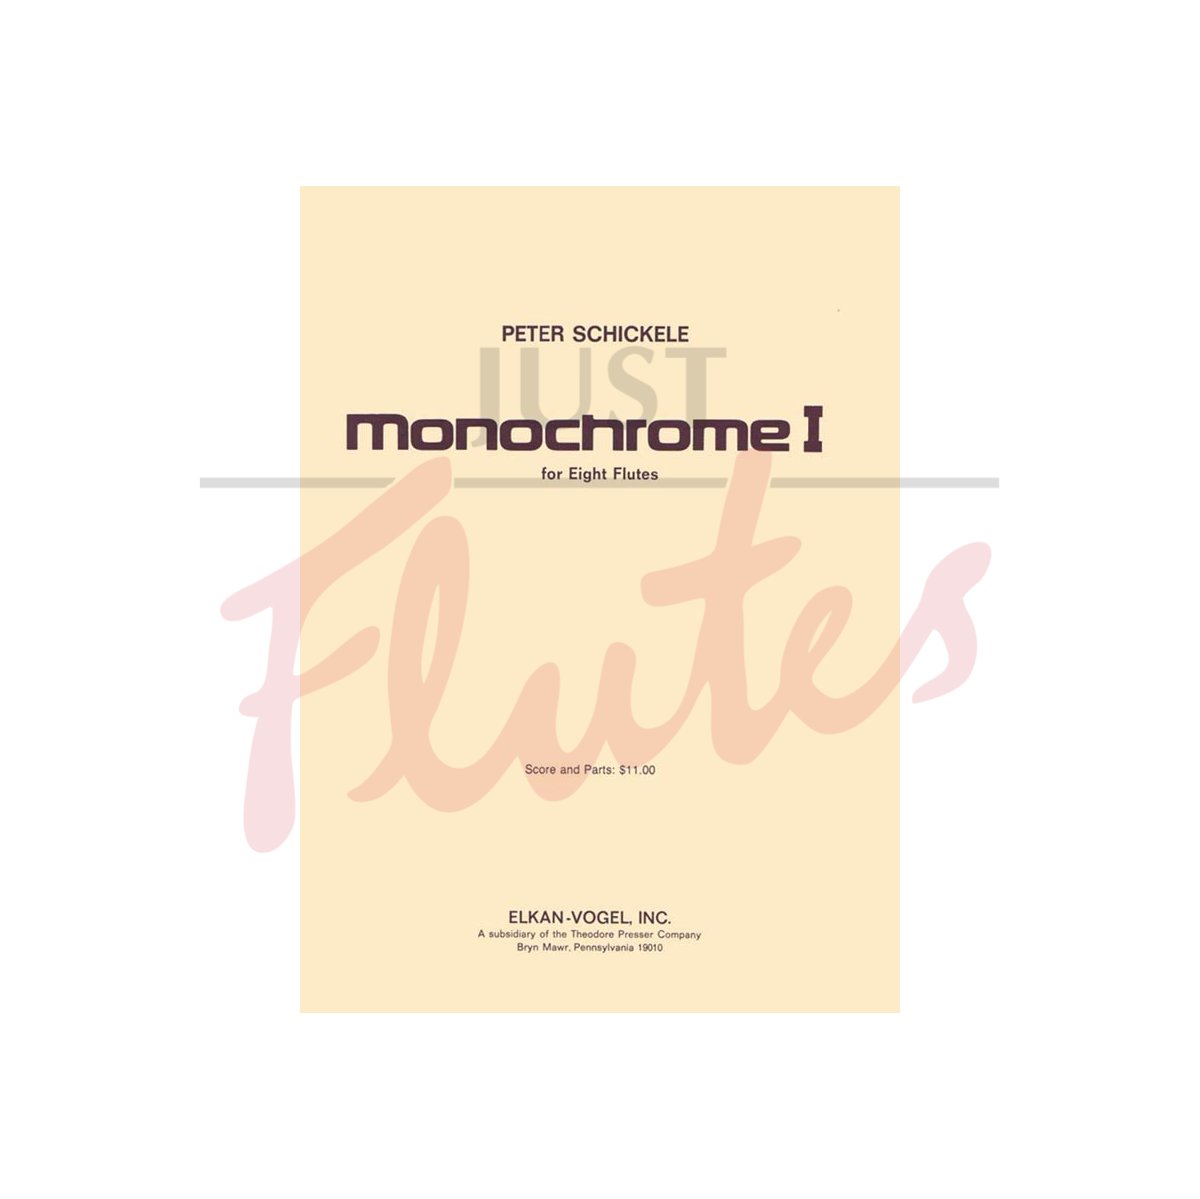 Monochrome 1 for Eight Flutes